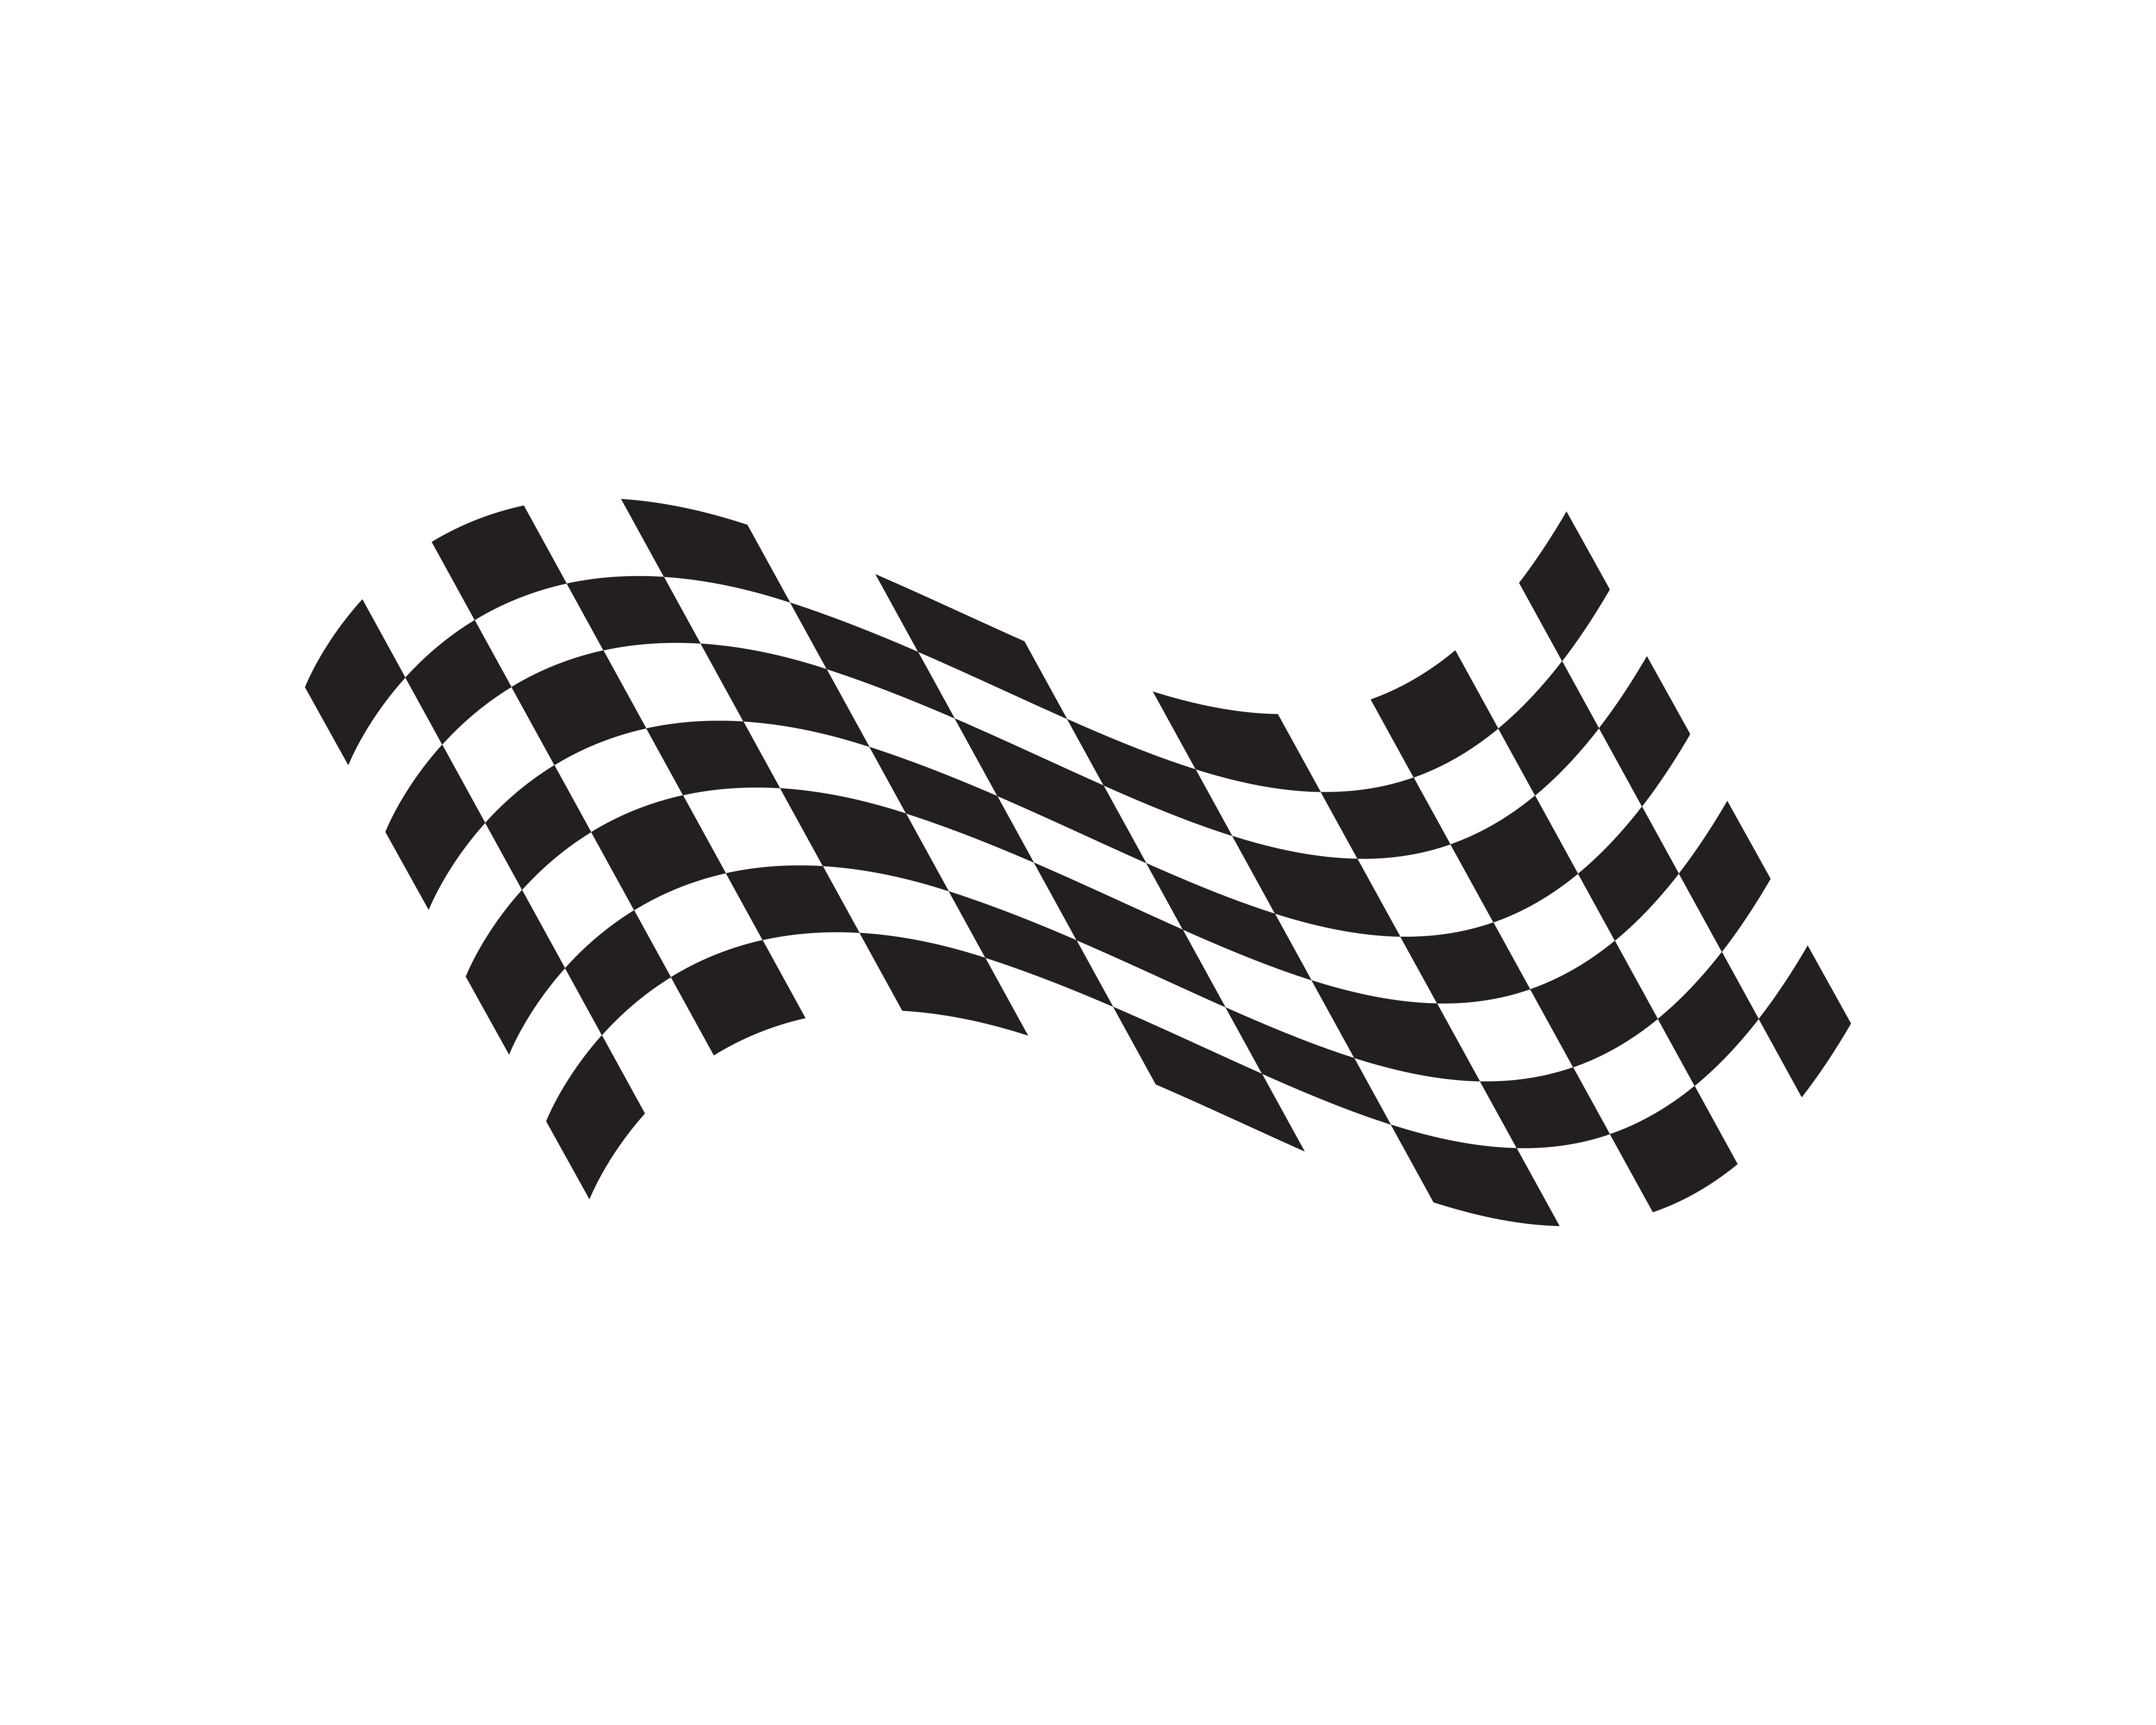 Race flag icon, simple design logo 596463 - Download Free Vectors